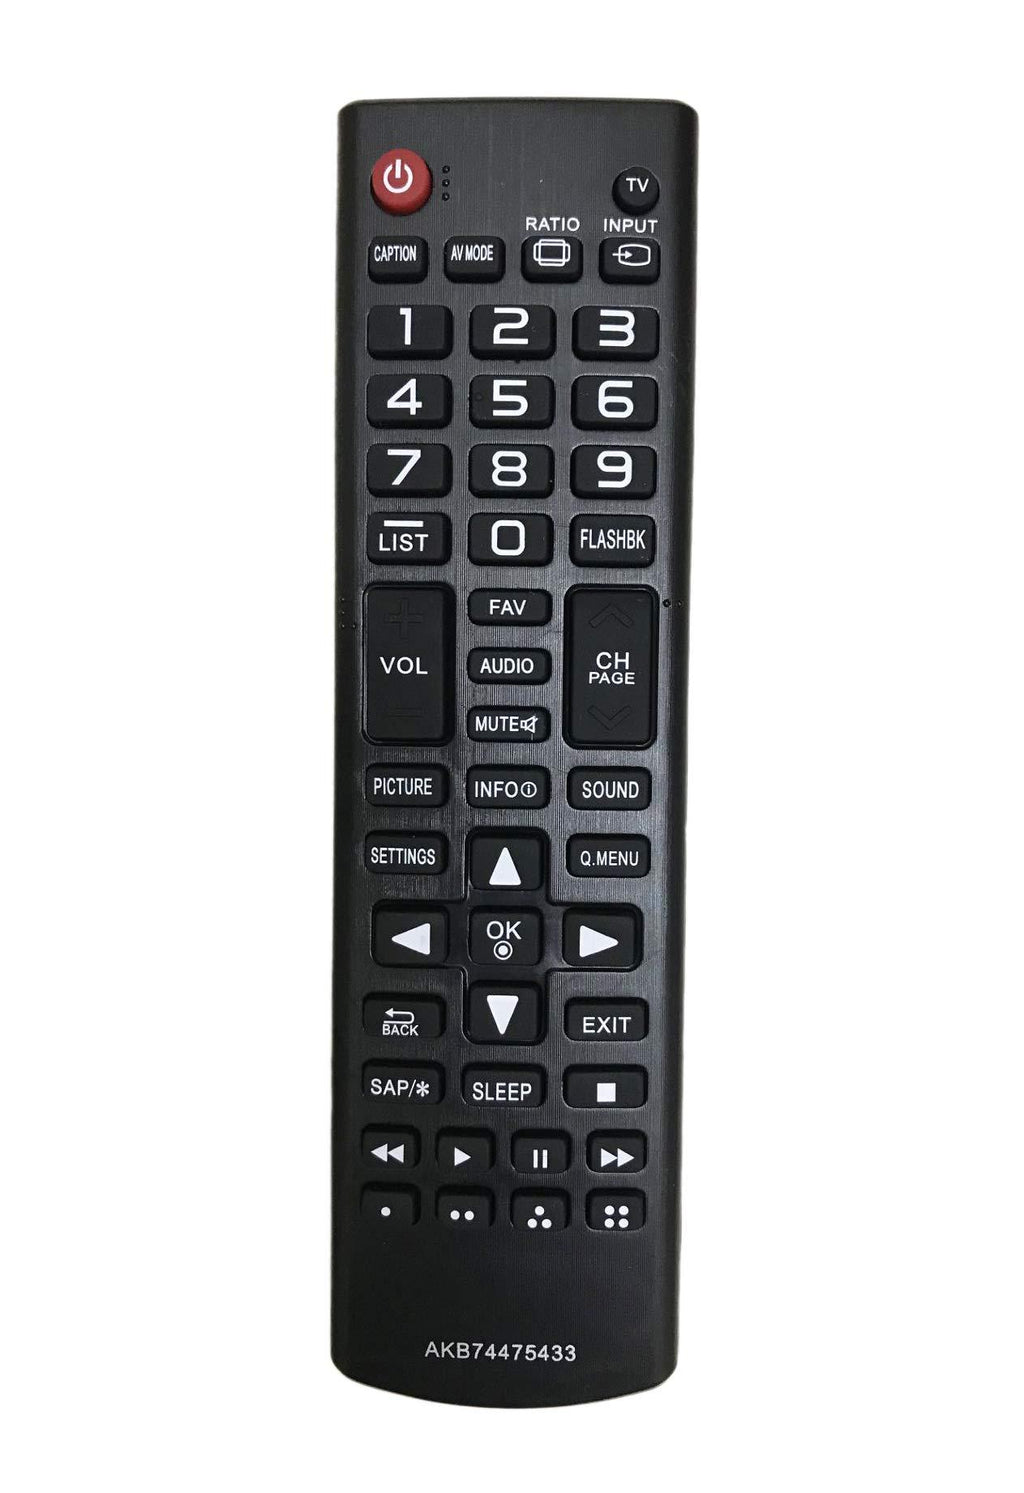 BOMAZ Replacement Remote Control for LG 24LJ4840 32LJ500B 32LJ500-UB 43LJ5000 43UH6030 49LJ510M-UD Smart LED TV